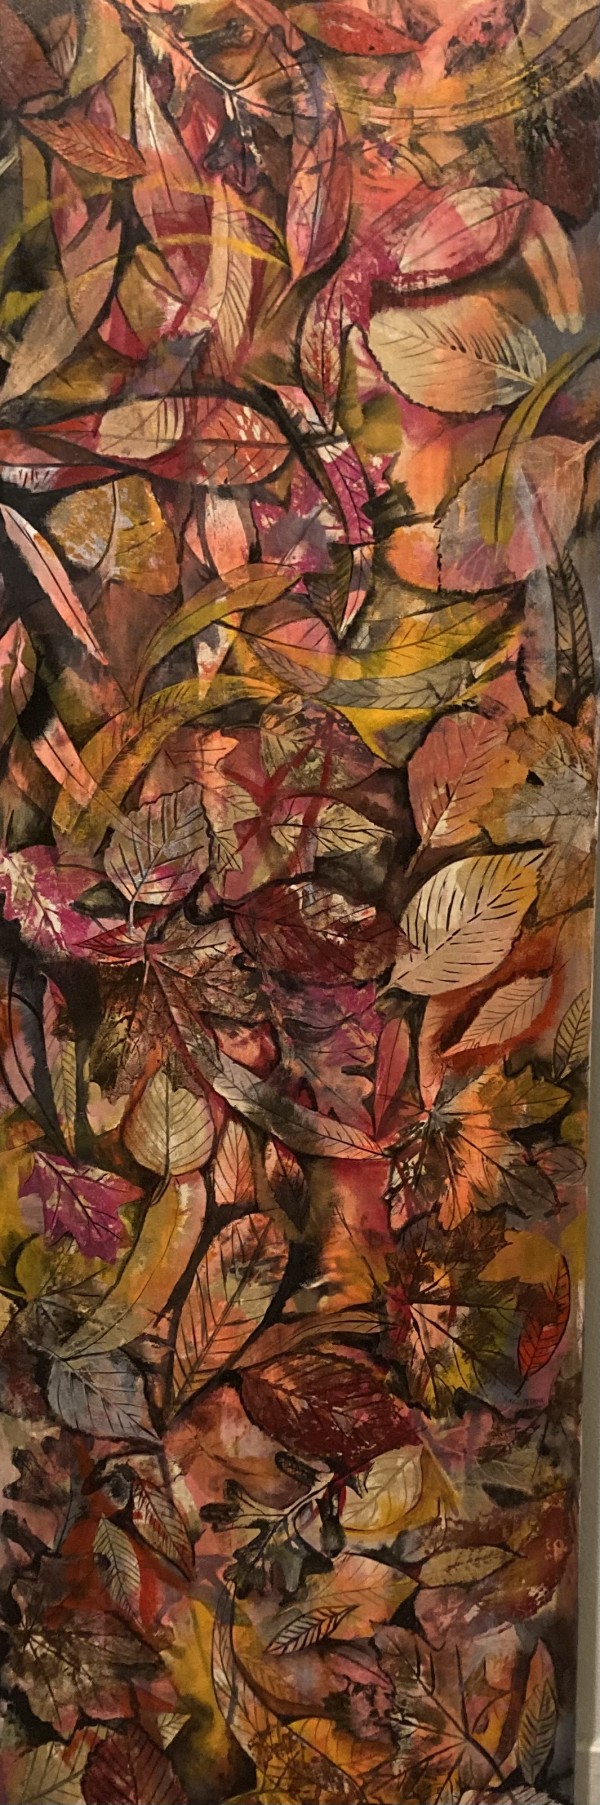 Fallen Leaves by Sandra Drabant